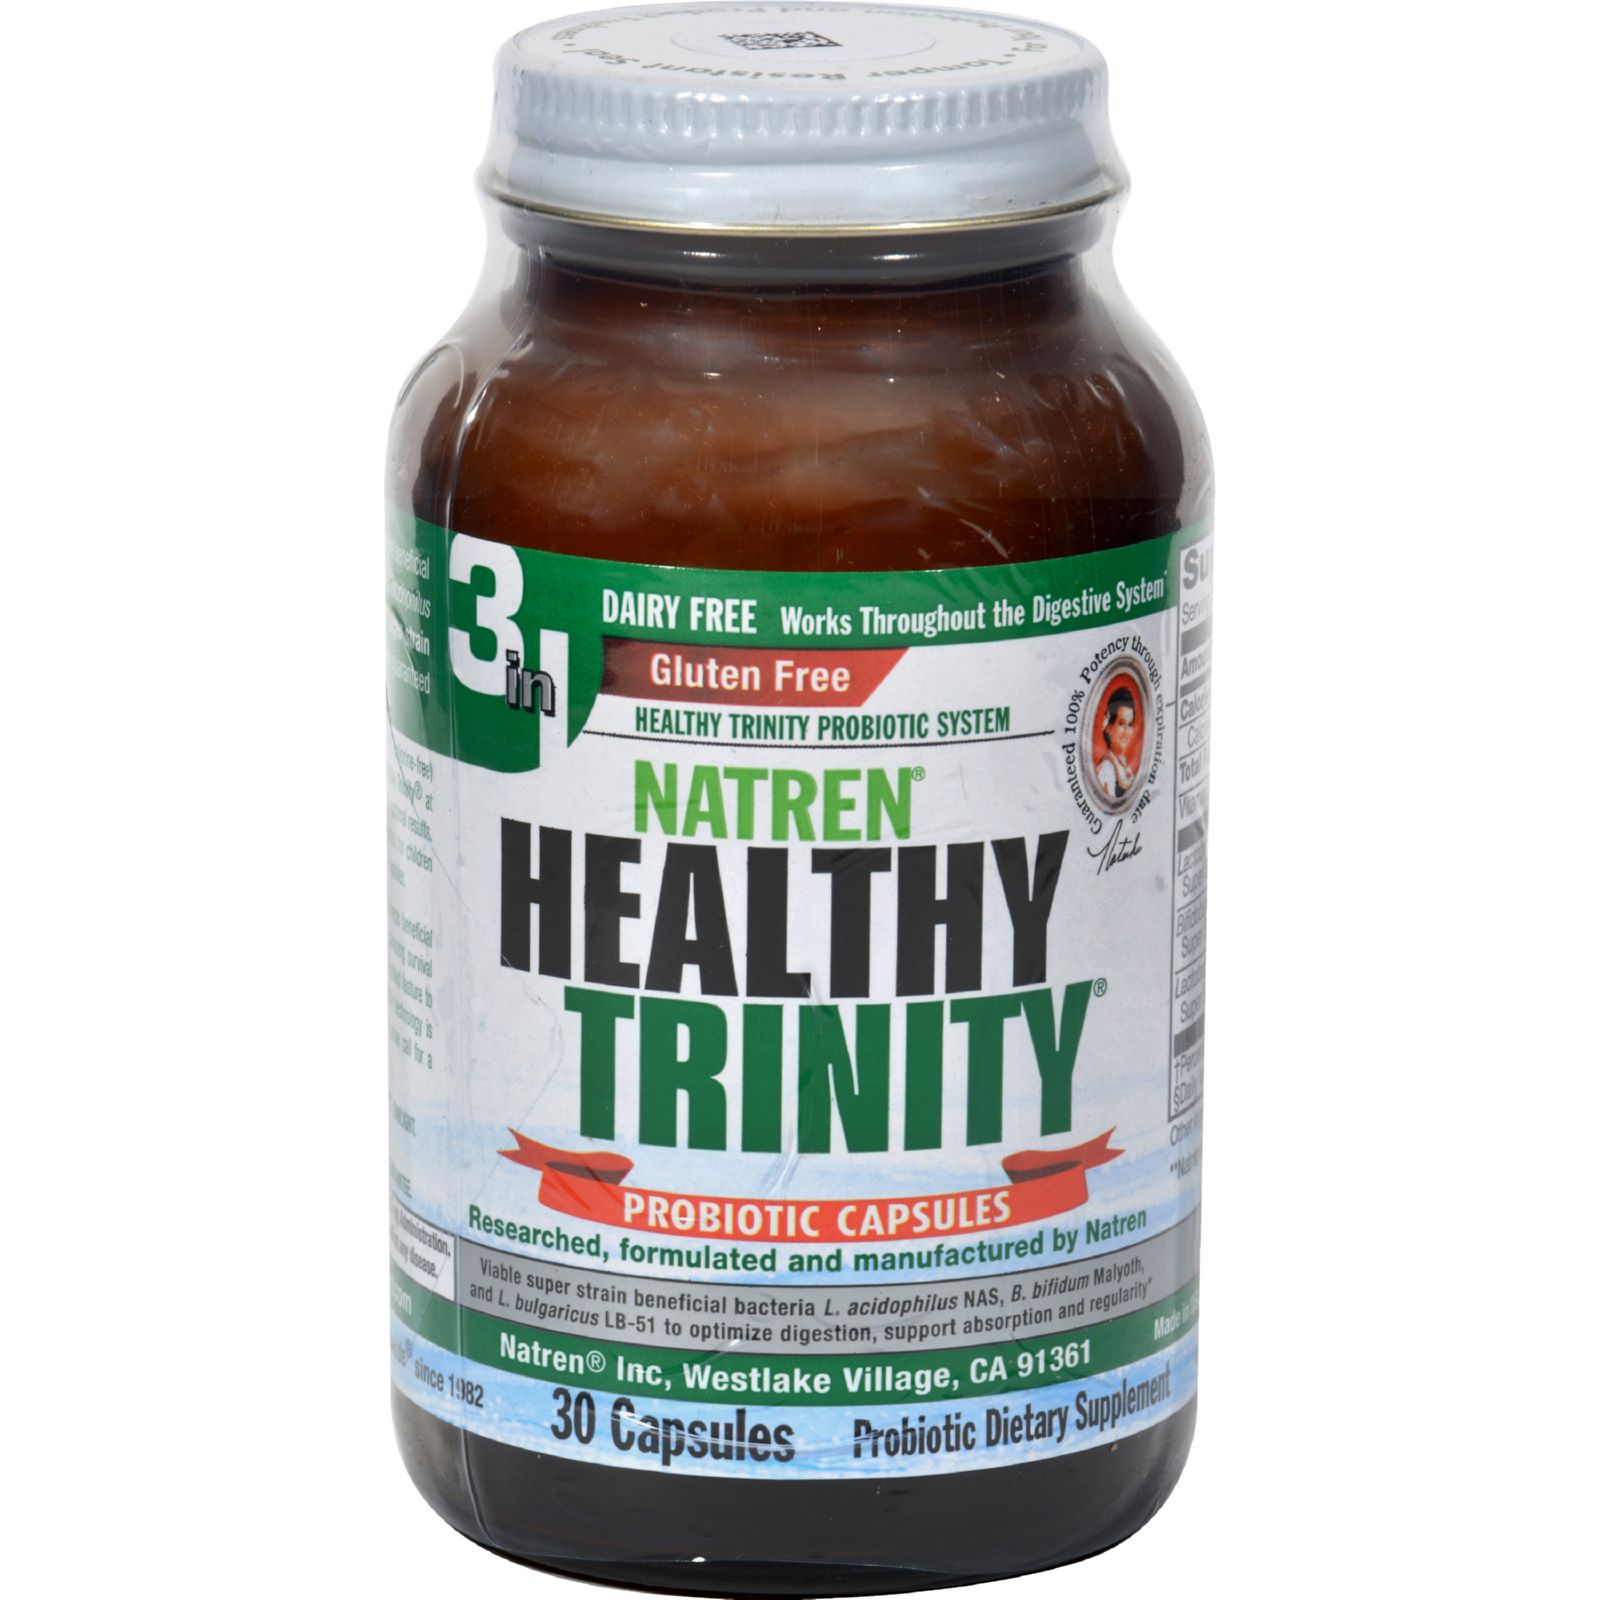 Natren Healthy Trinity Probiotic Capsules - 1 Each - 30 CAP